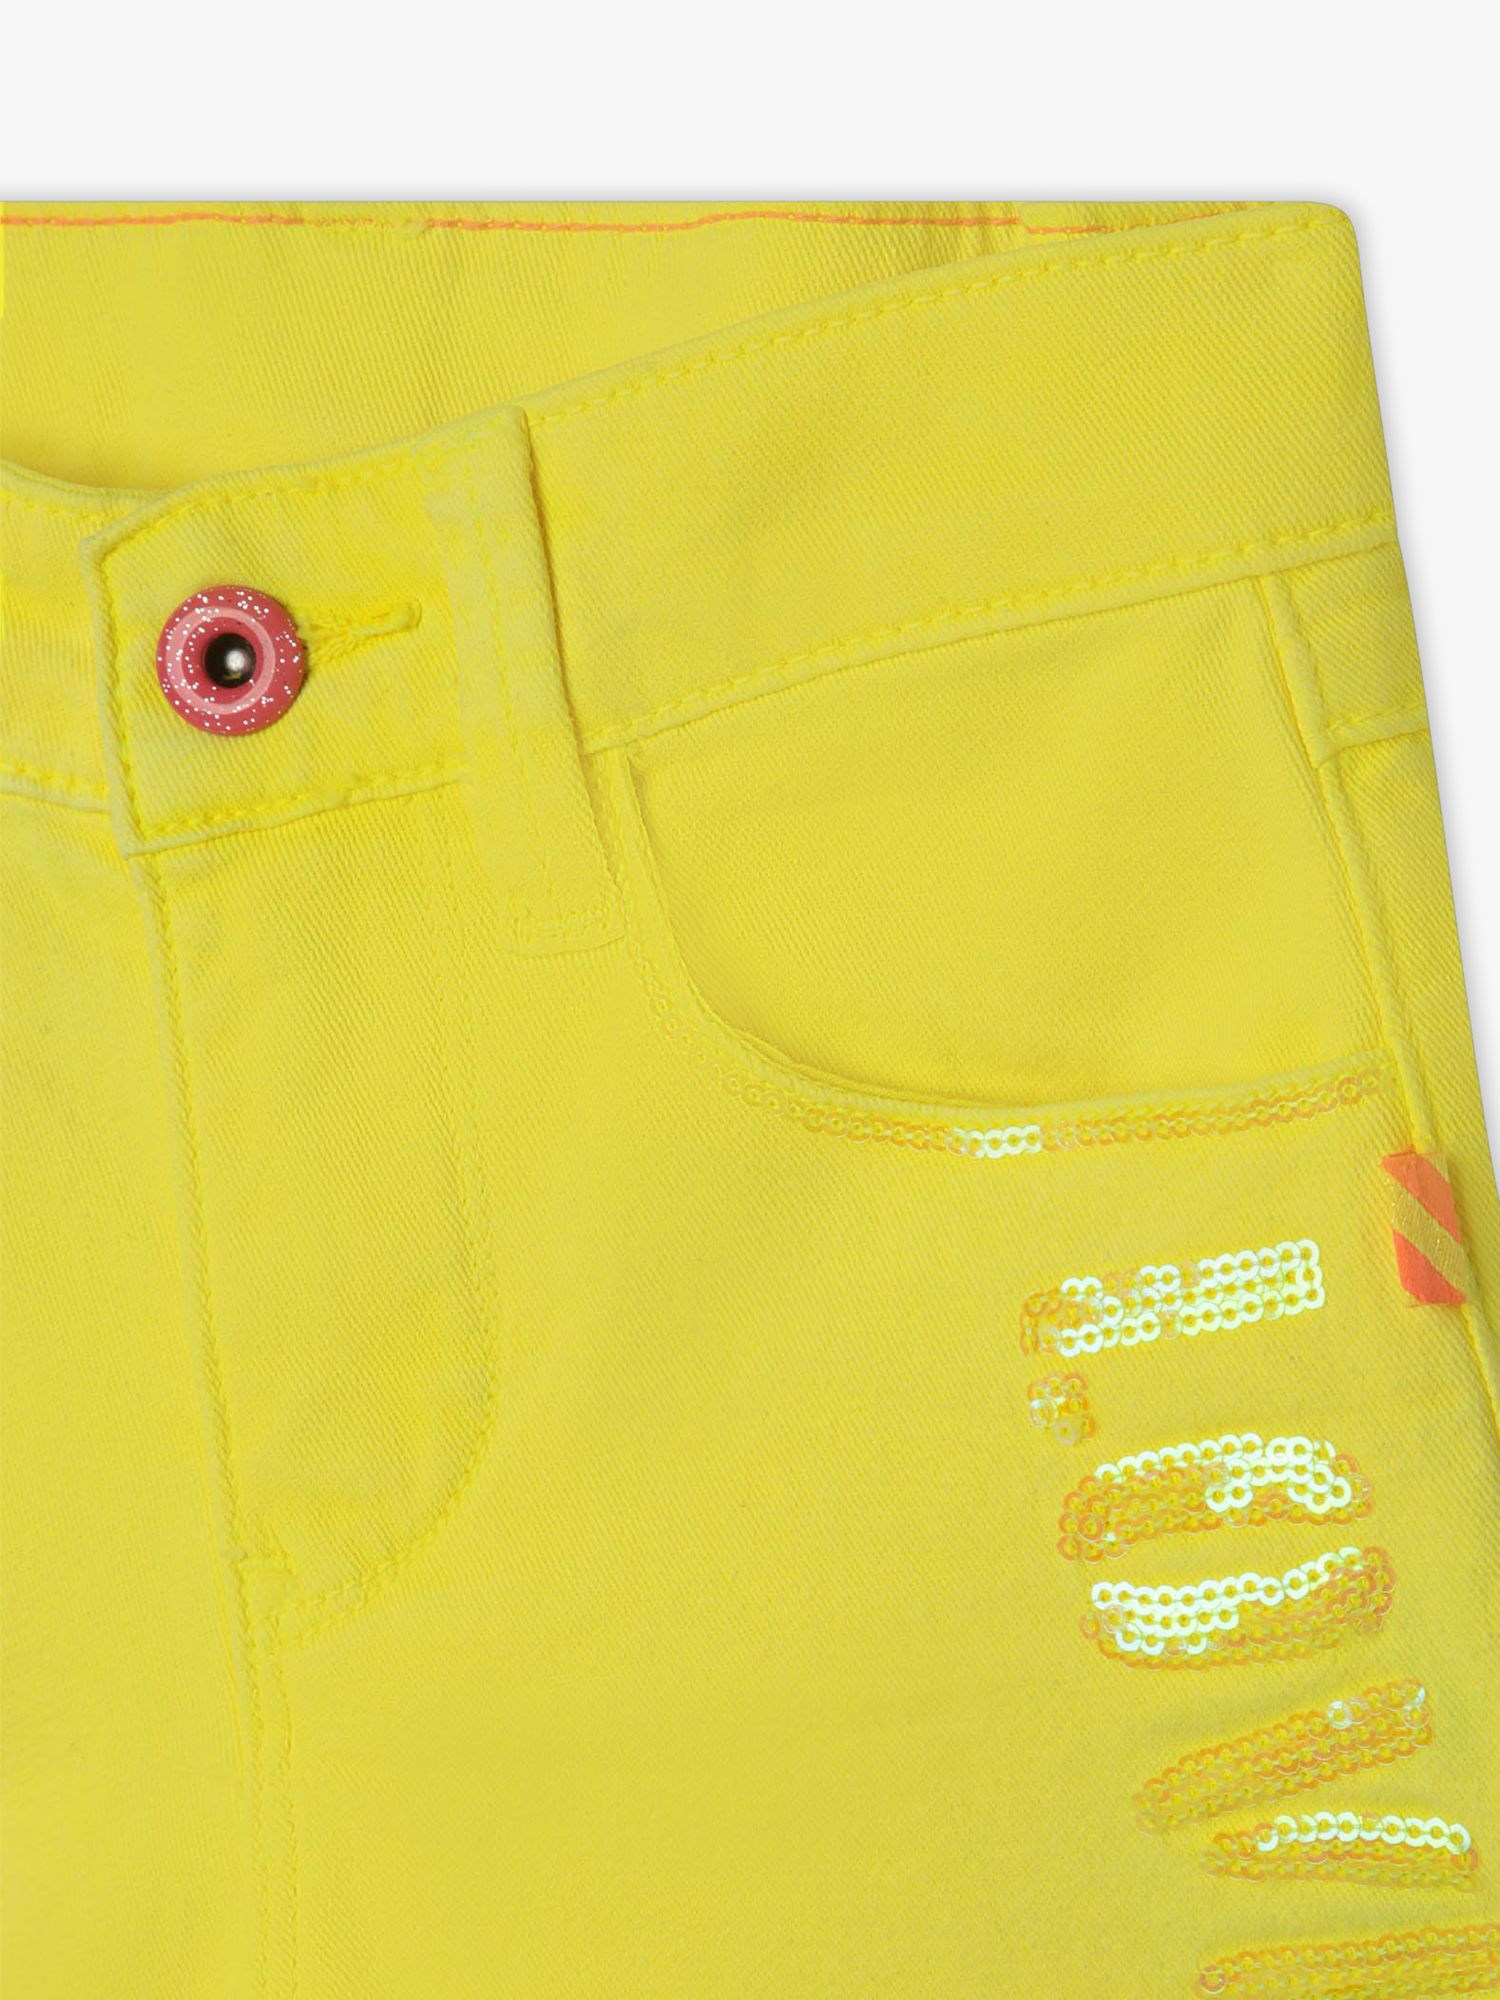 Billieblush Girl's Denim Sequin Embellished Shorts, Yellow/Multi, 2 years